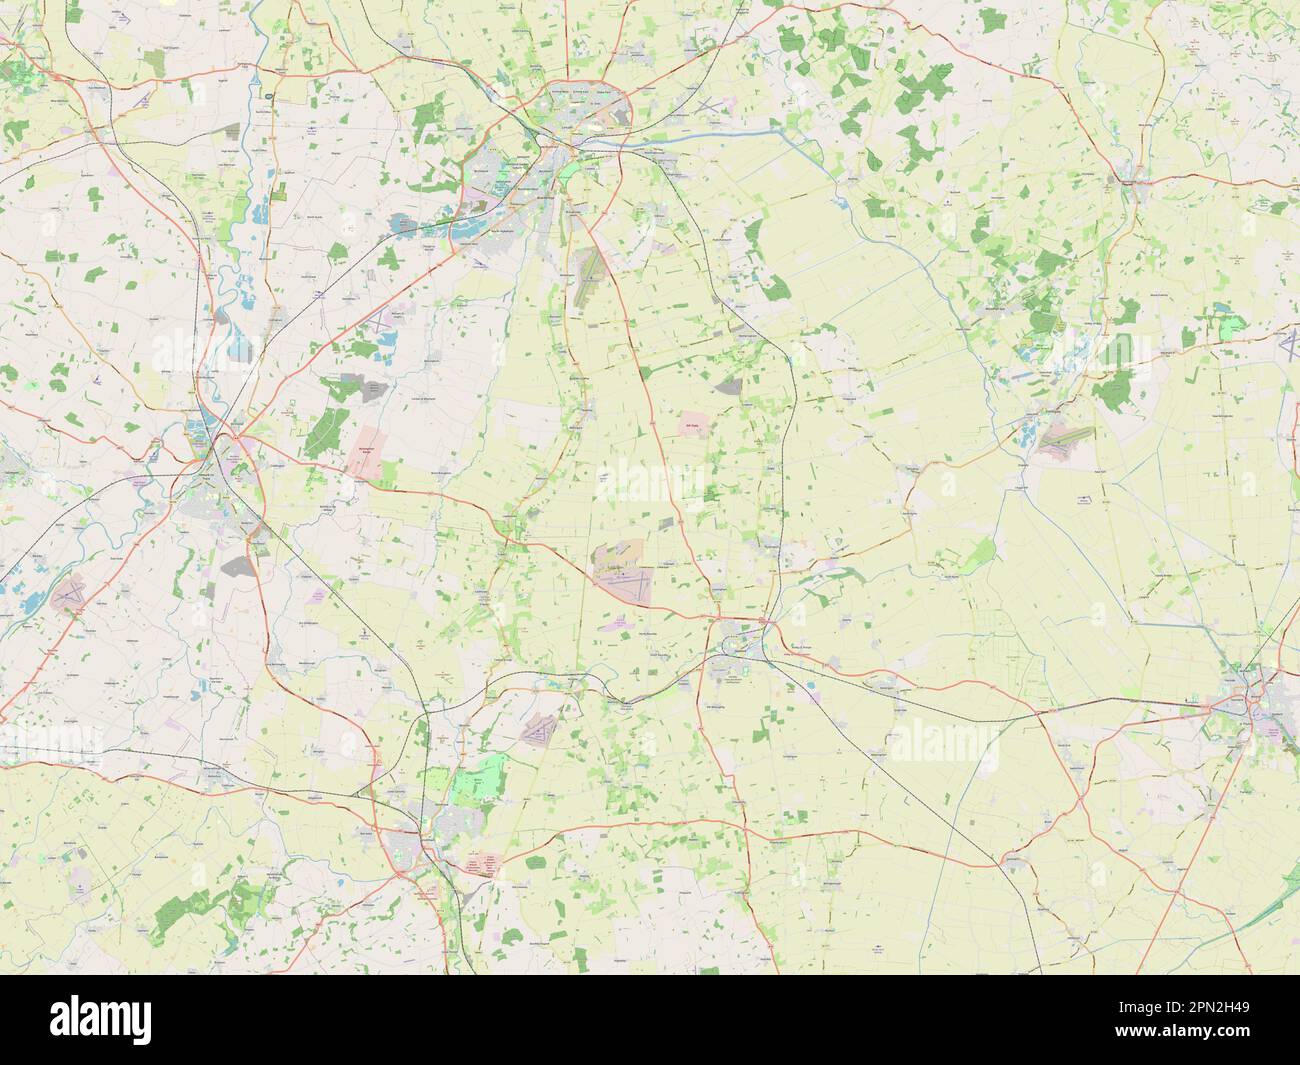 North Kesteven, non metropolitan district of England - Great Britain. Open Street Map Stock Photo